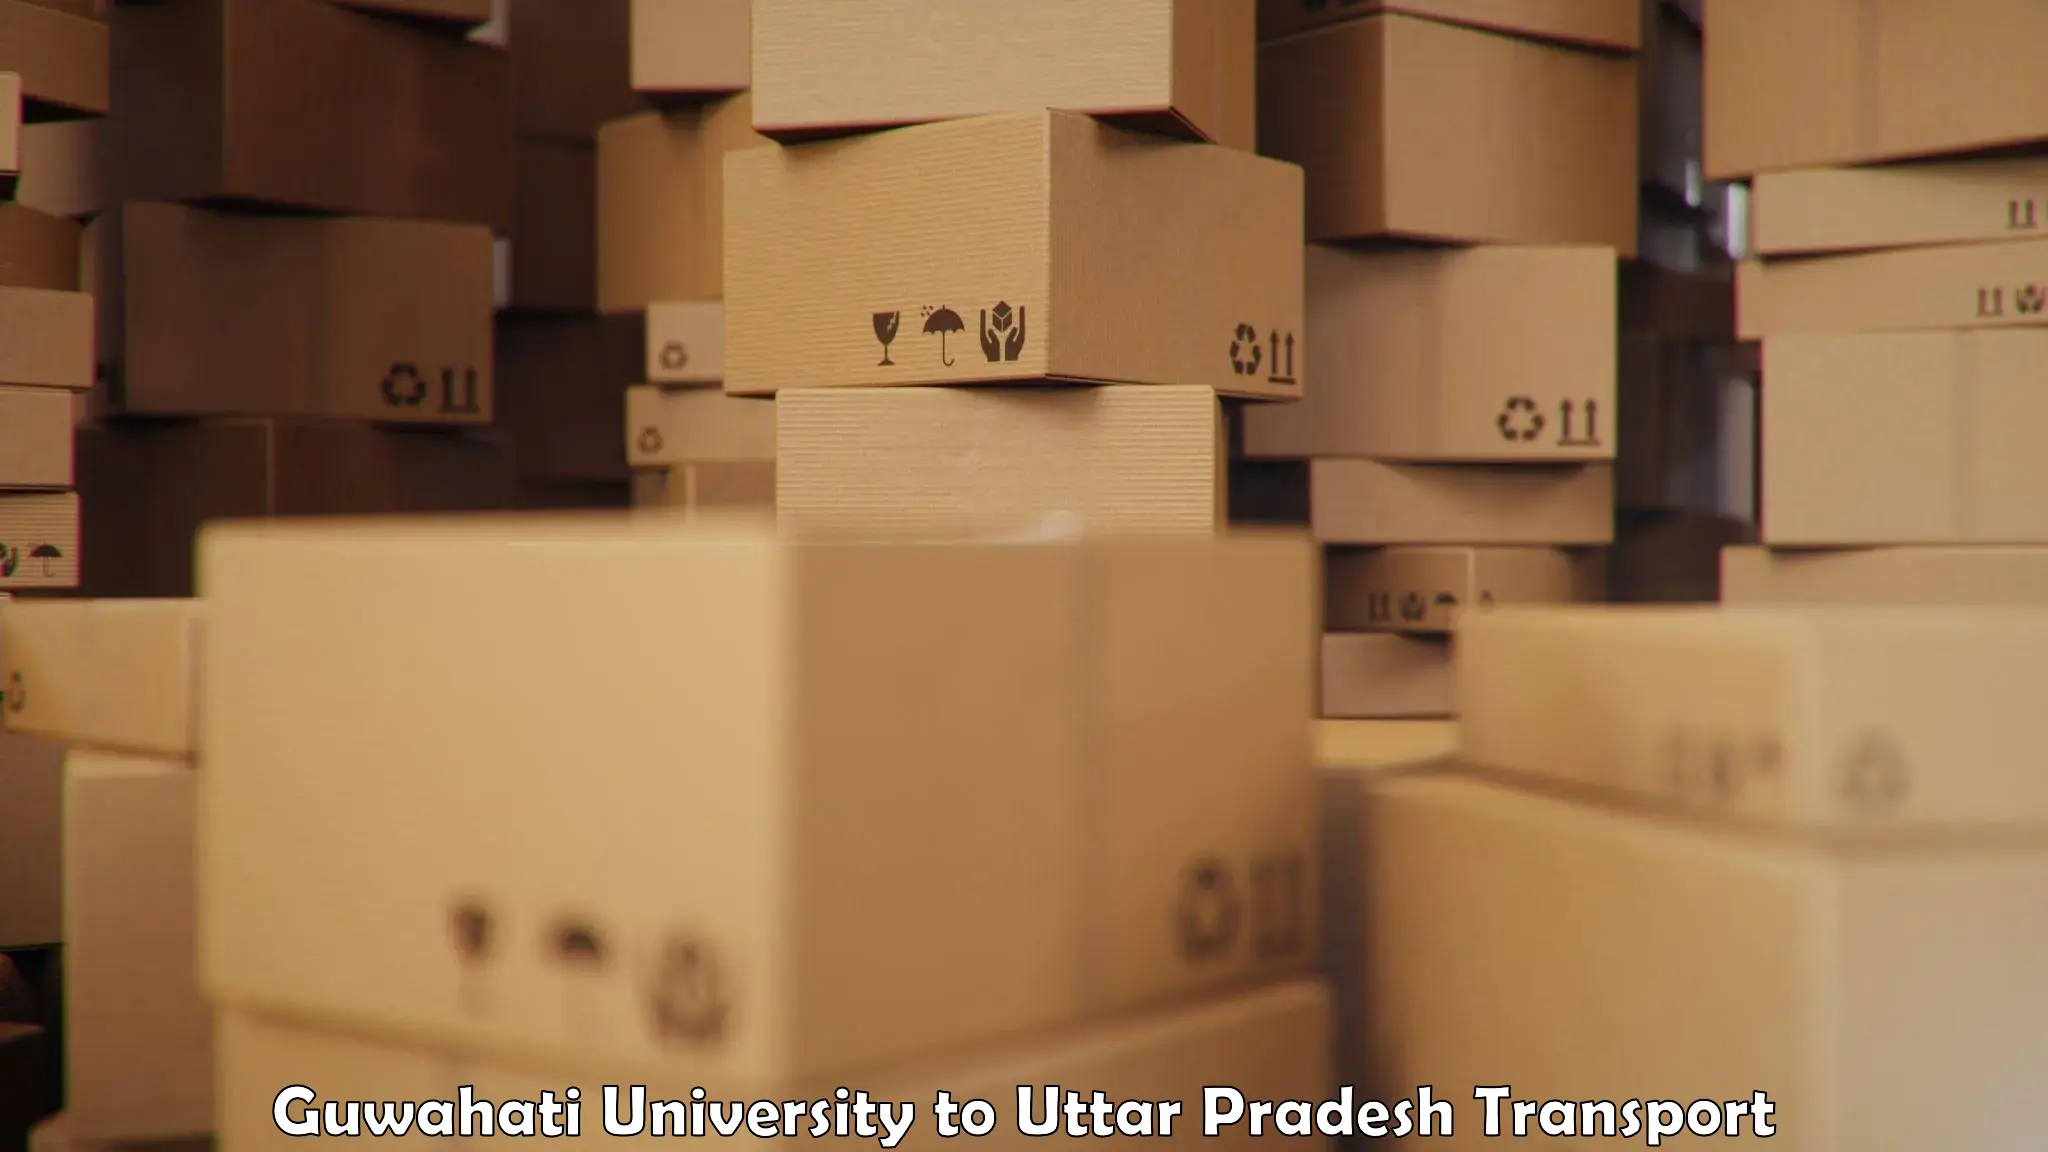 Intercity transport in Guwahati University to Uttar Pradesh